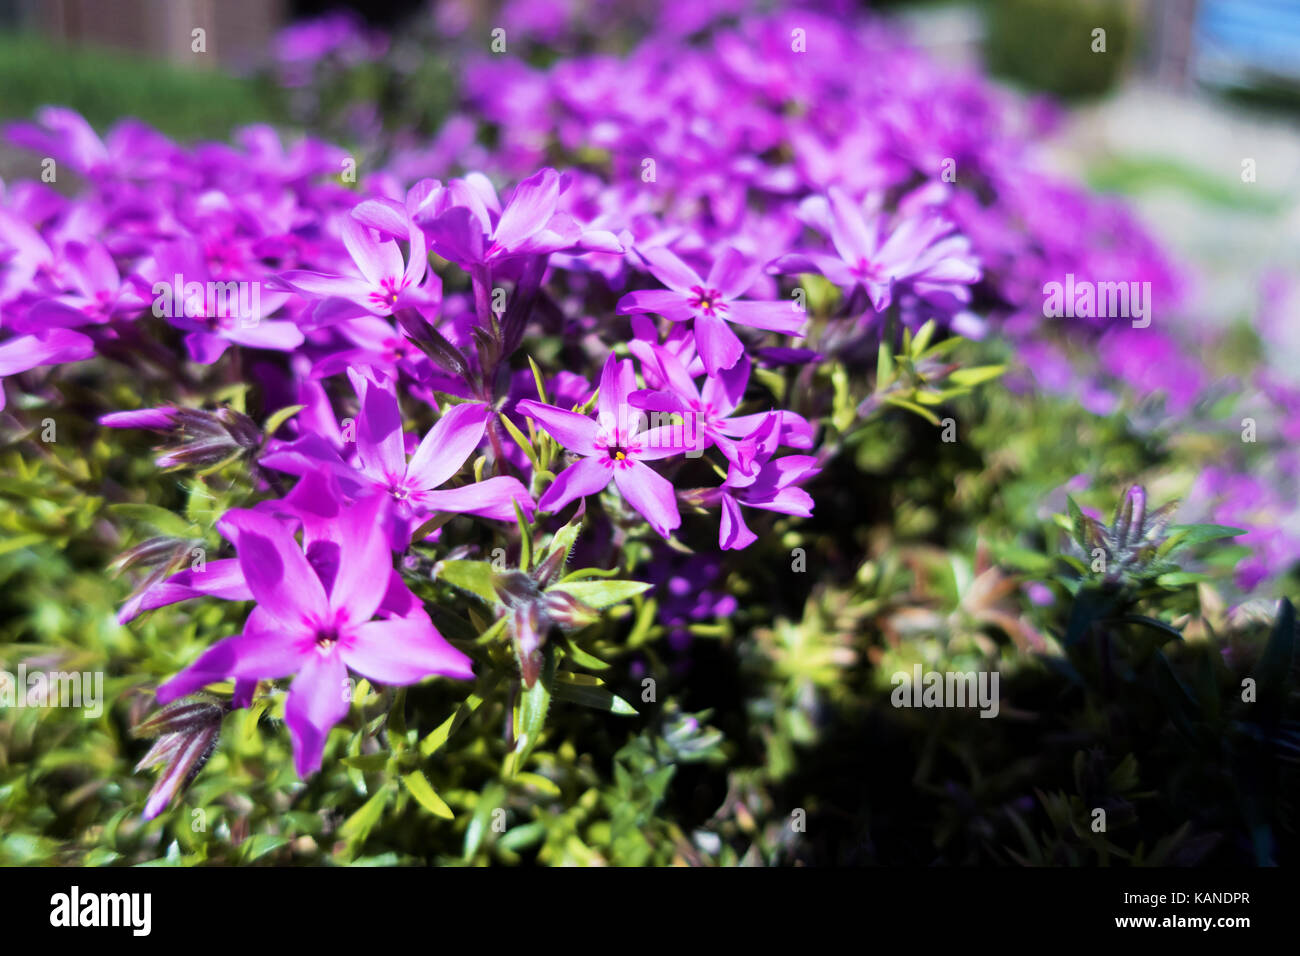 A spread of purple phlox flowers. Stock Photo